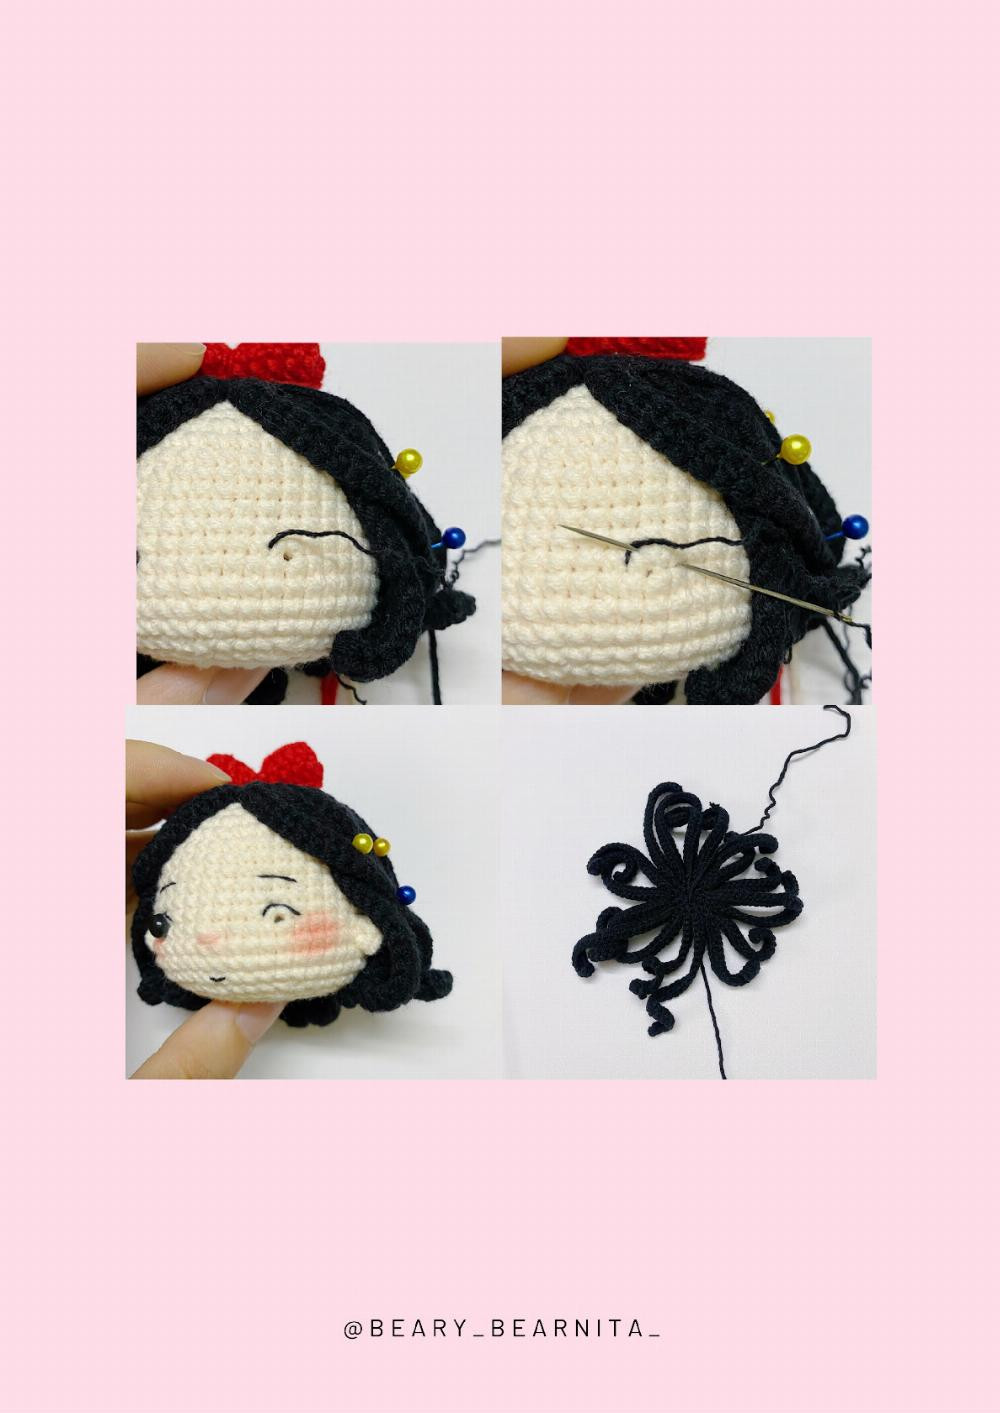 little snow white crochet pattern